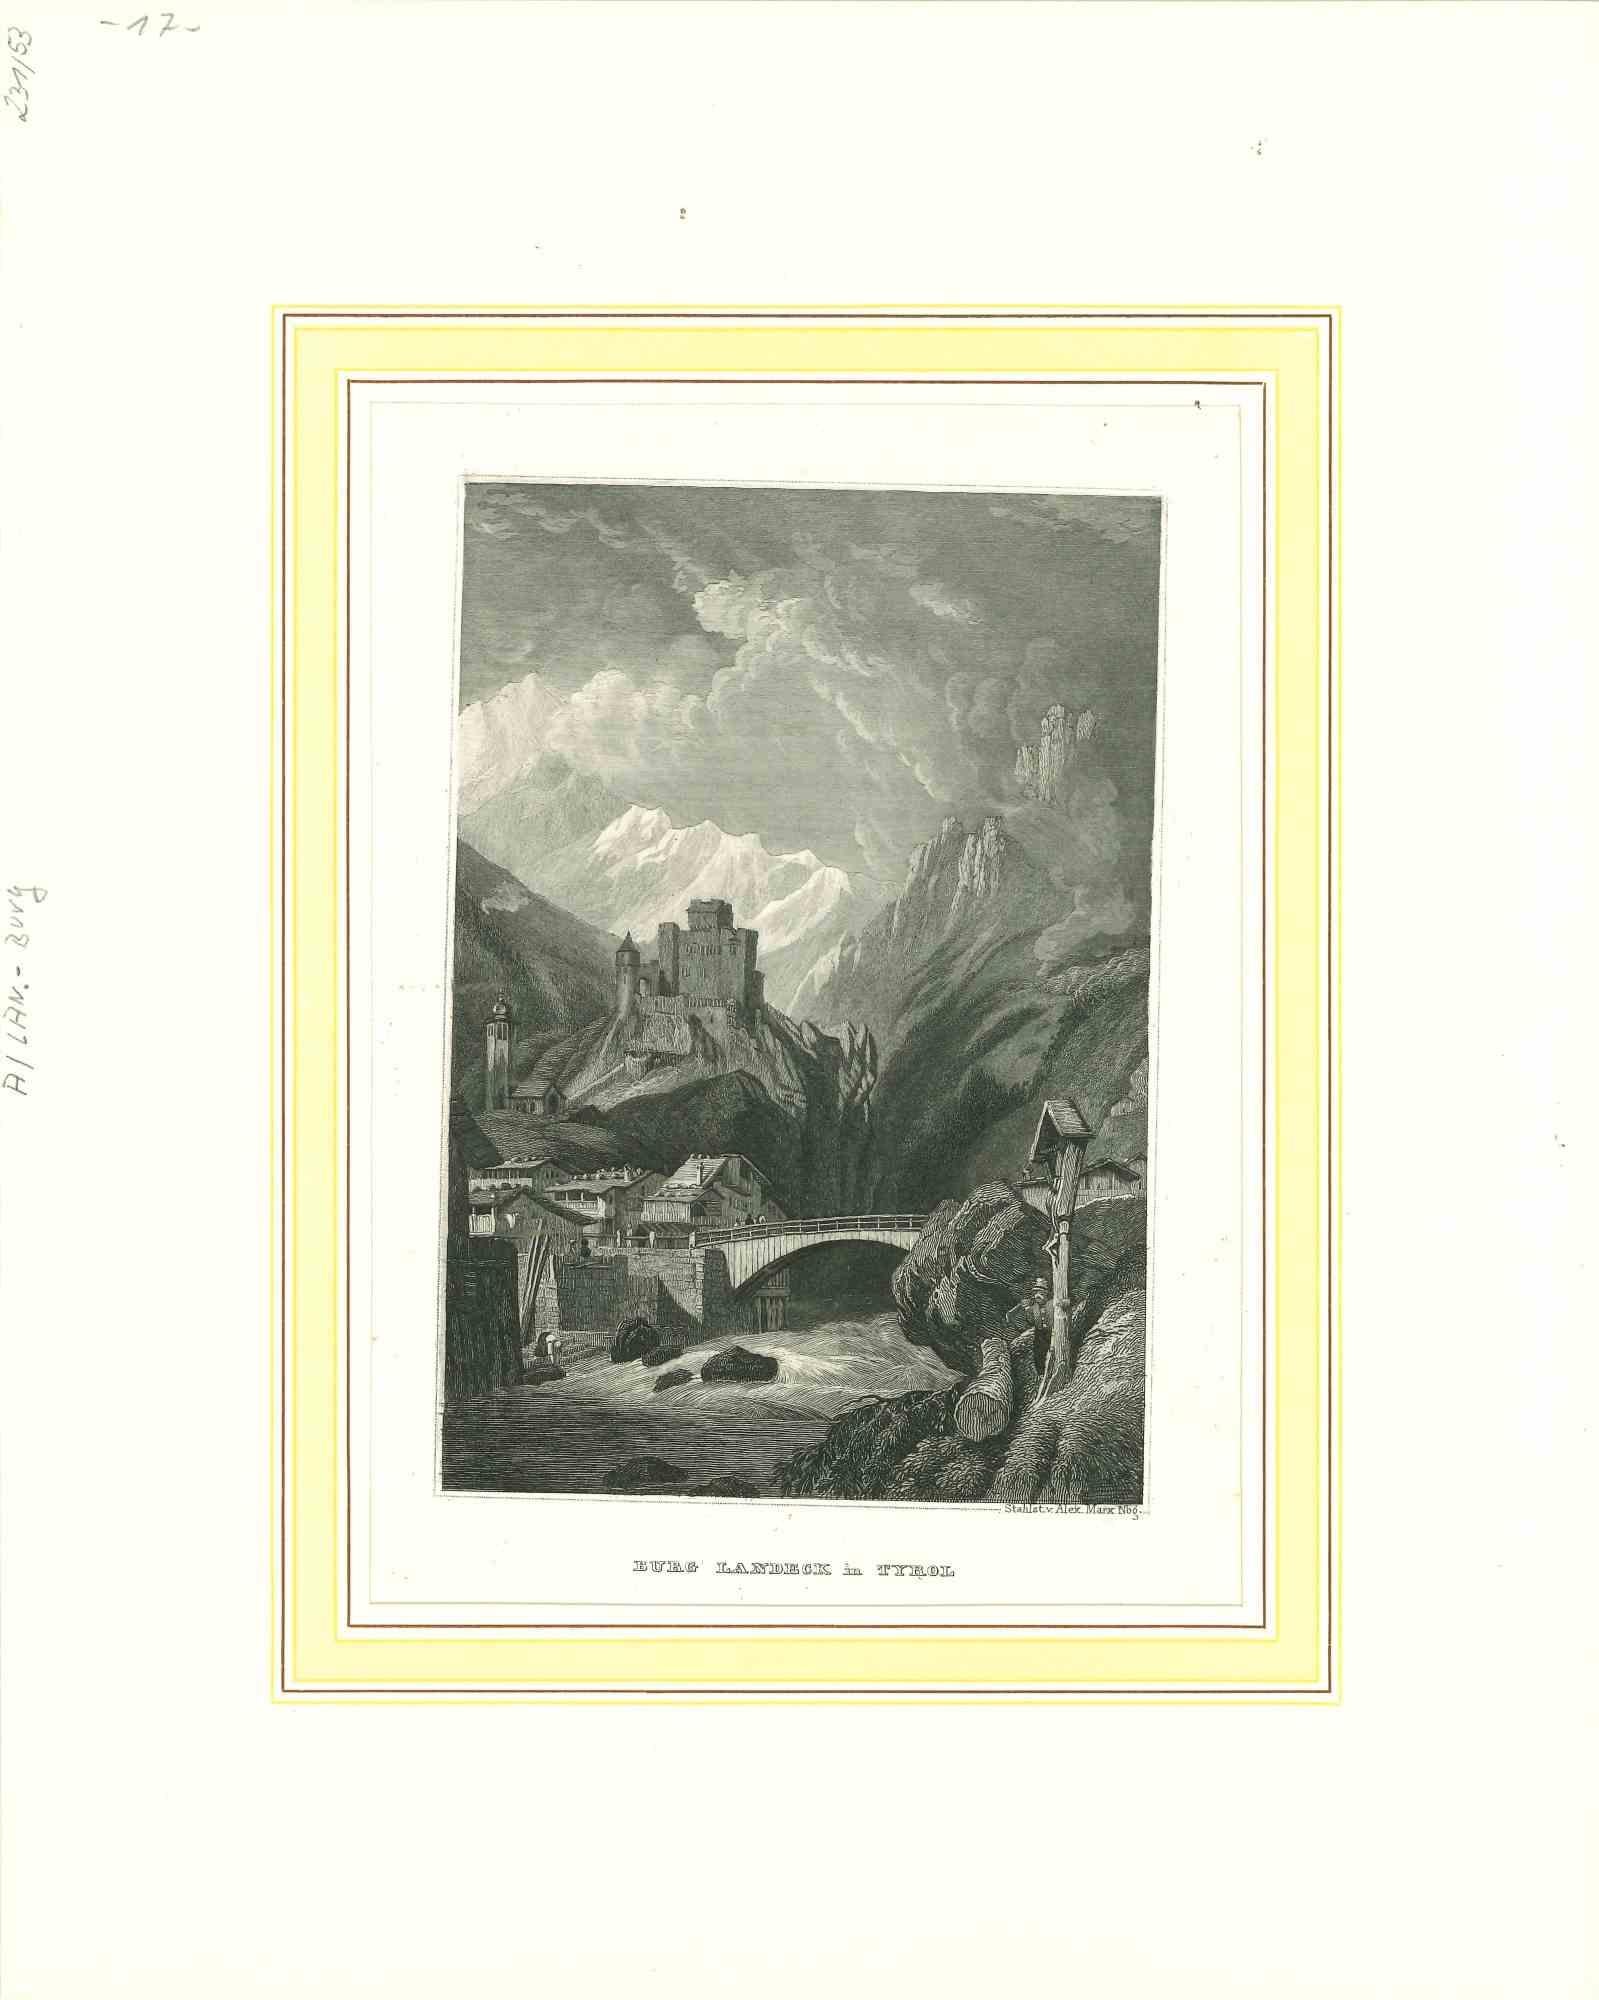 Unknown Landscape Print - Ancient View of Burg Landeck - Original Lithograph - Mid-19th Century